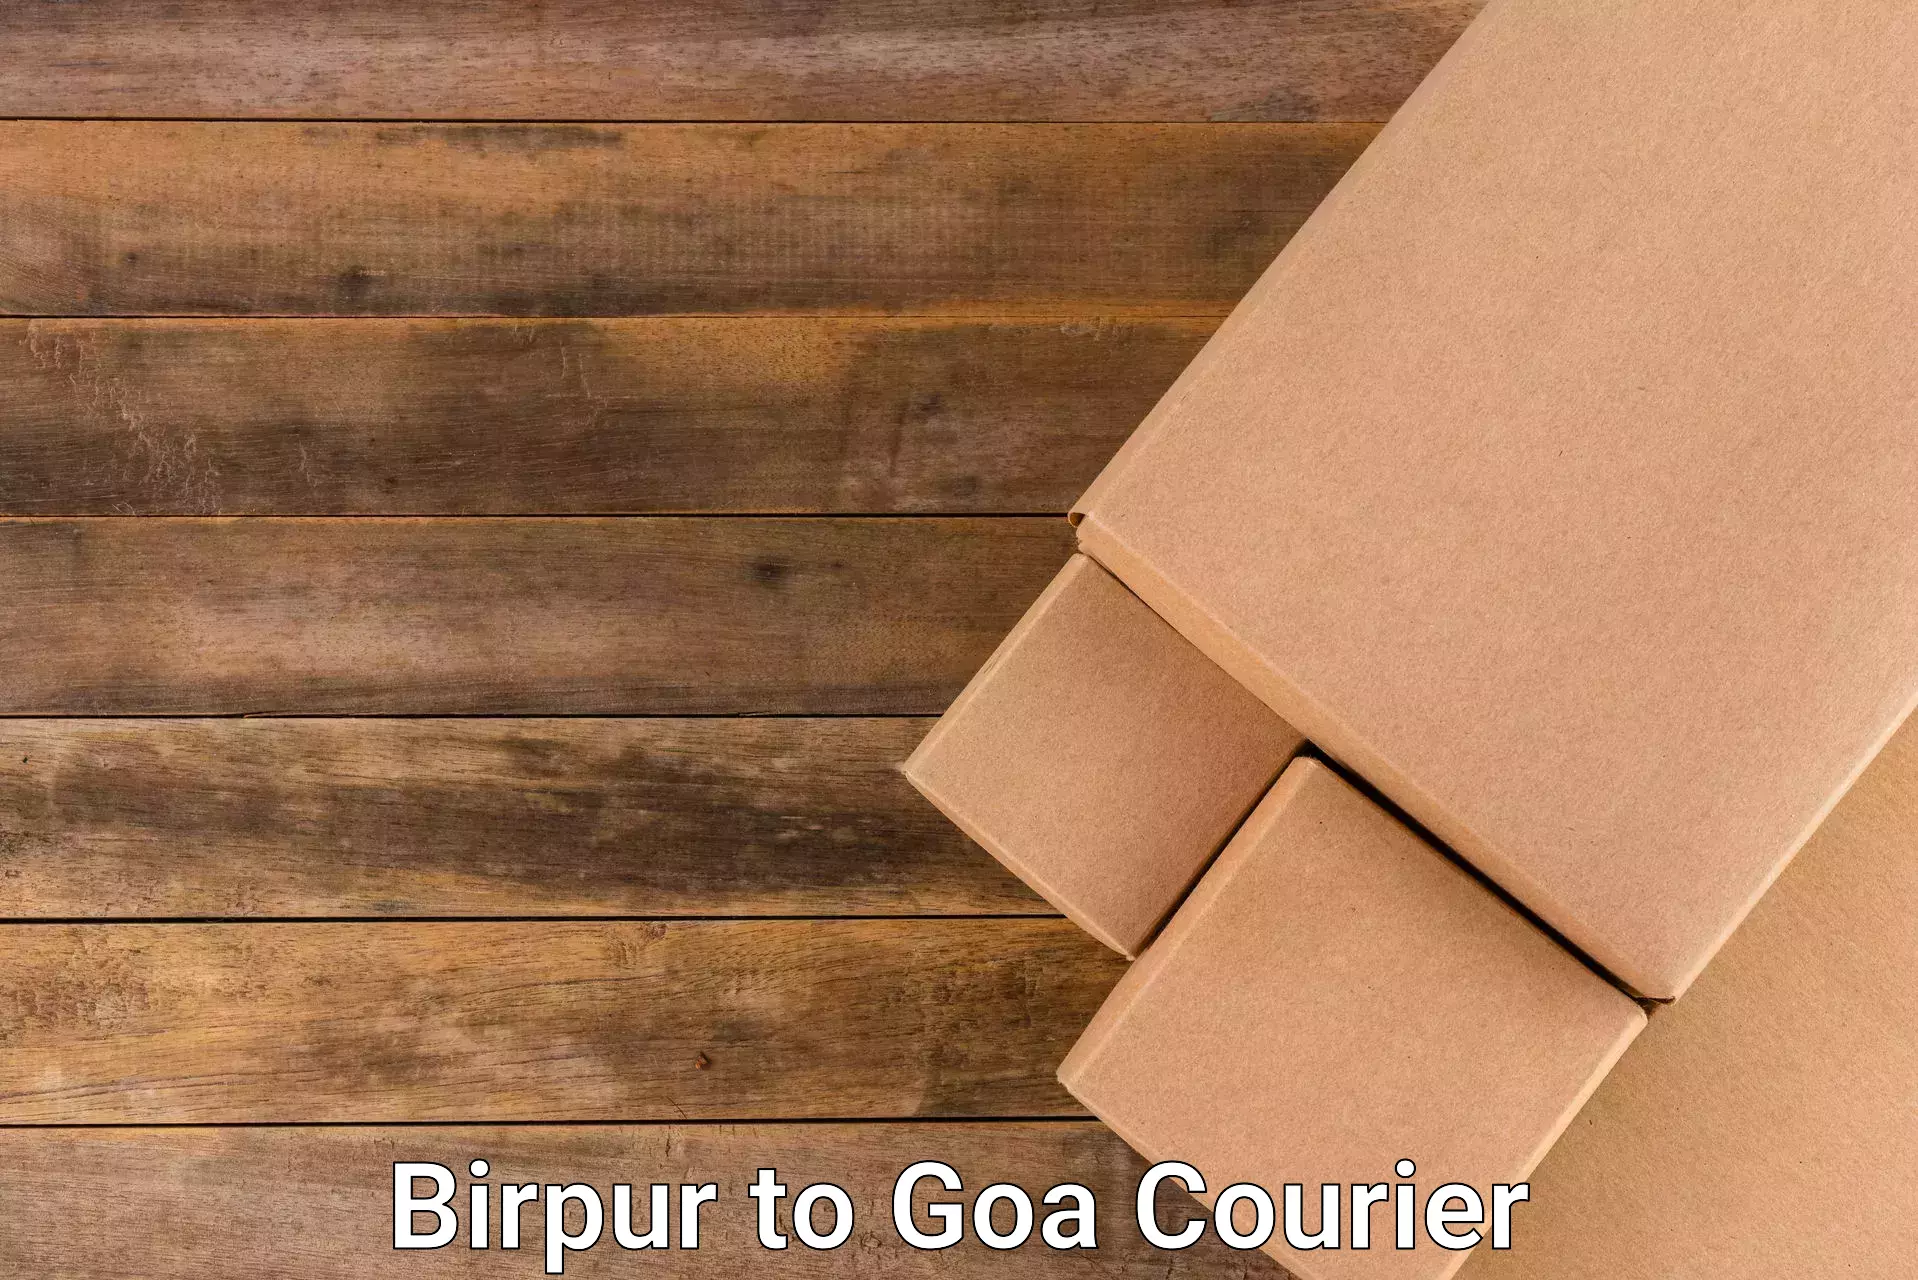 State-of-the-art courier technology Birpur to Vasco da Gama